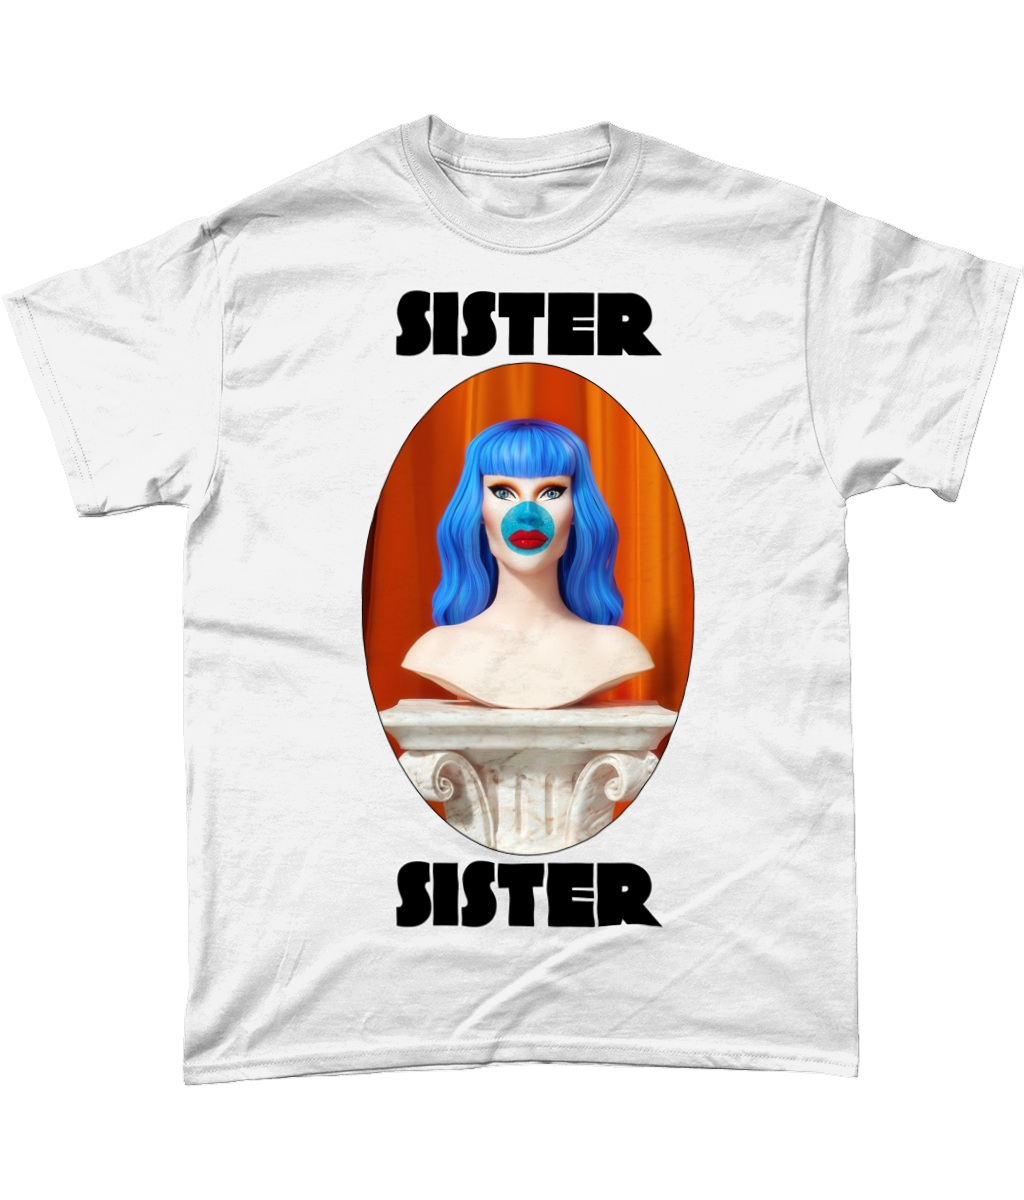 Sister Sister - Bust T-Shirt